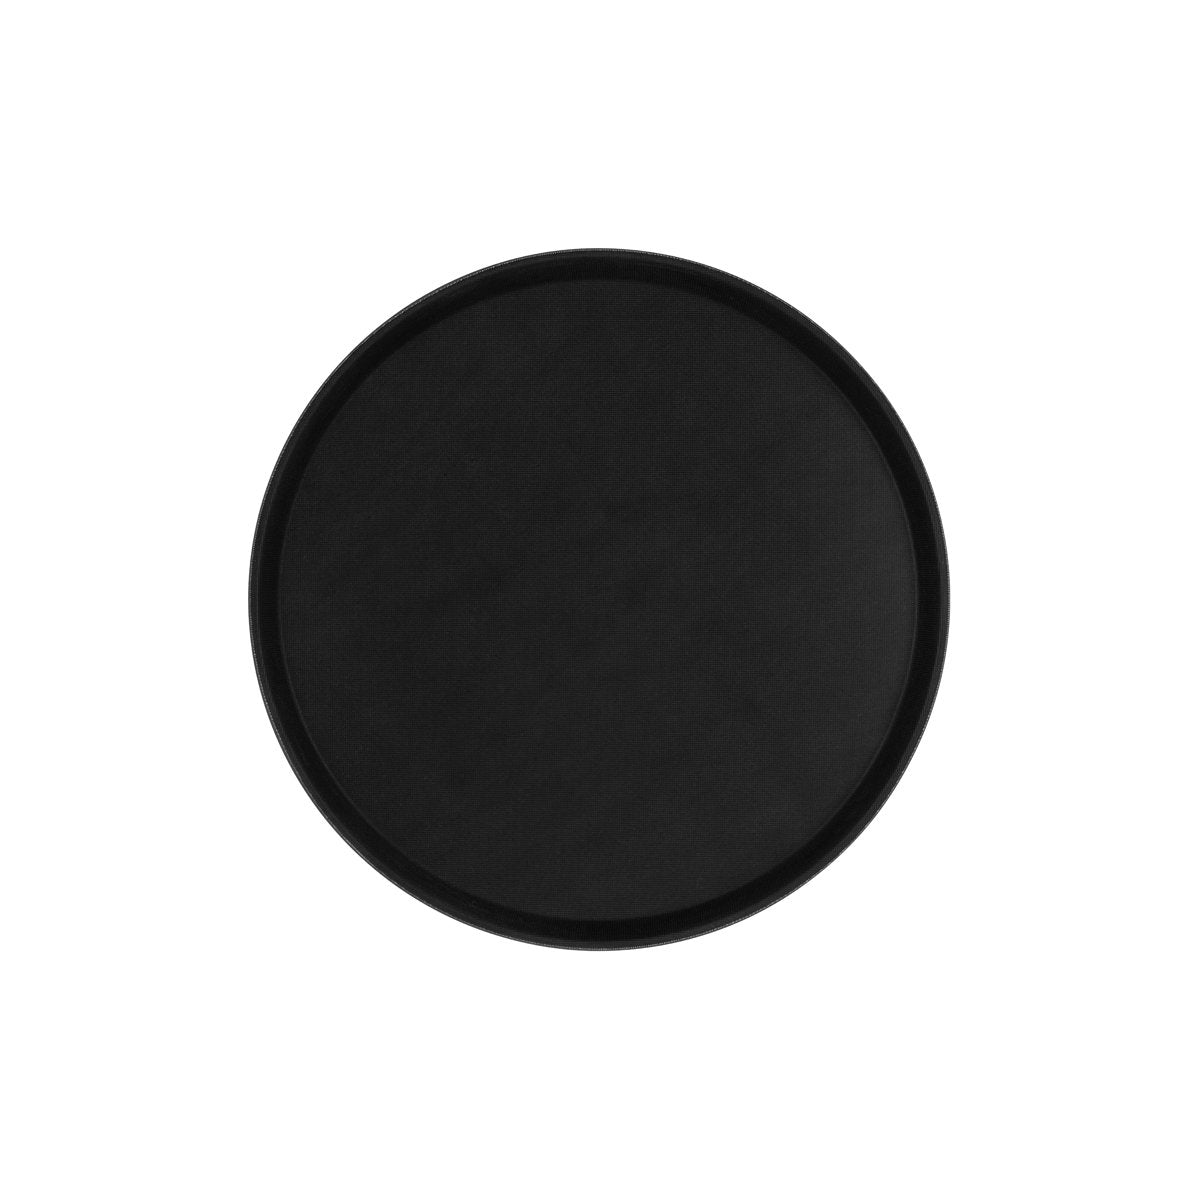 04293 Chef Inox Round Tray Non-Slip Plastic Black 400mm Tomkin Australia Hospitality Supplies